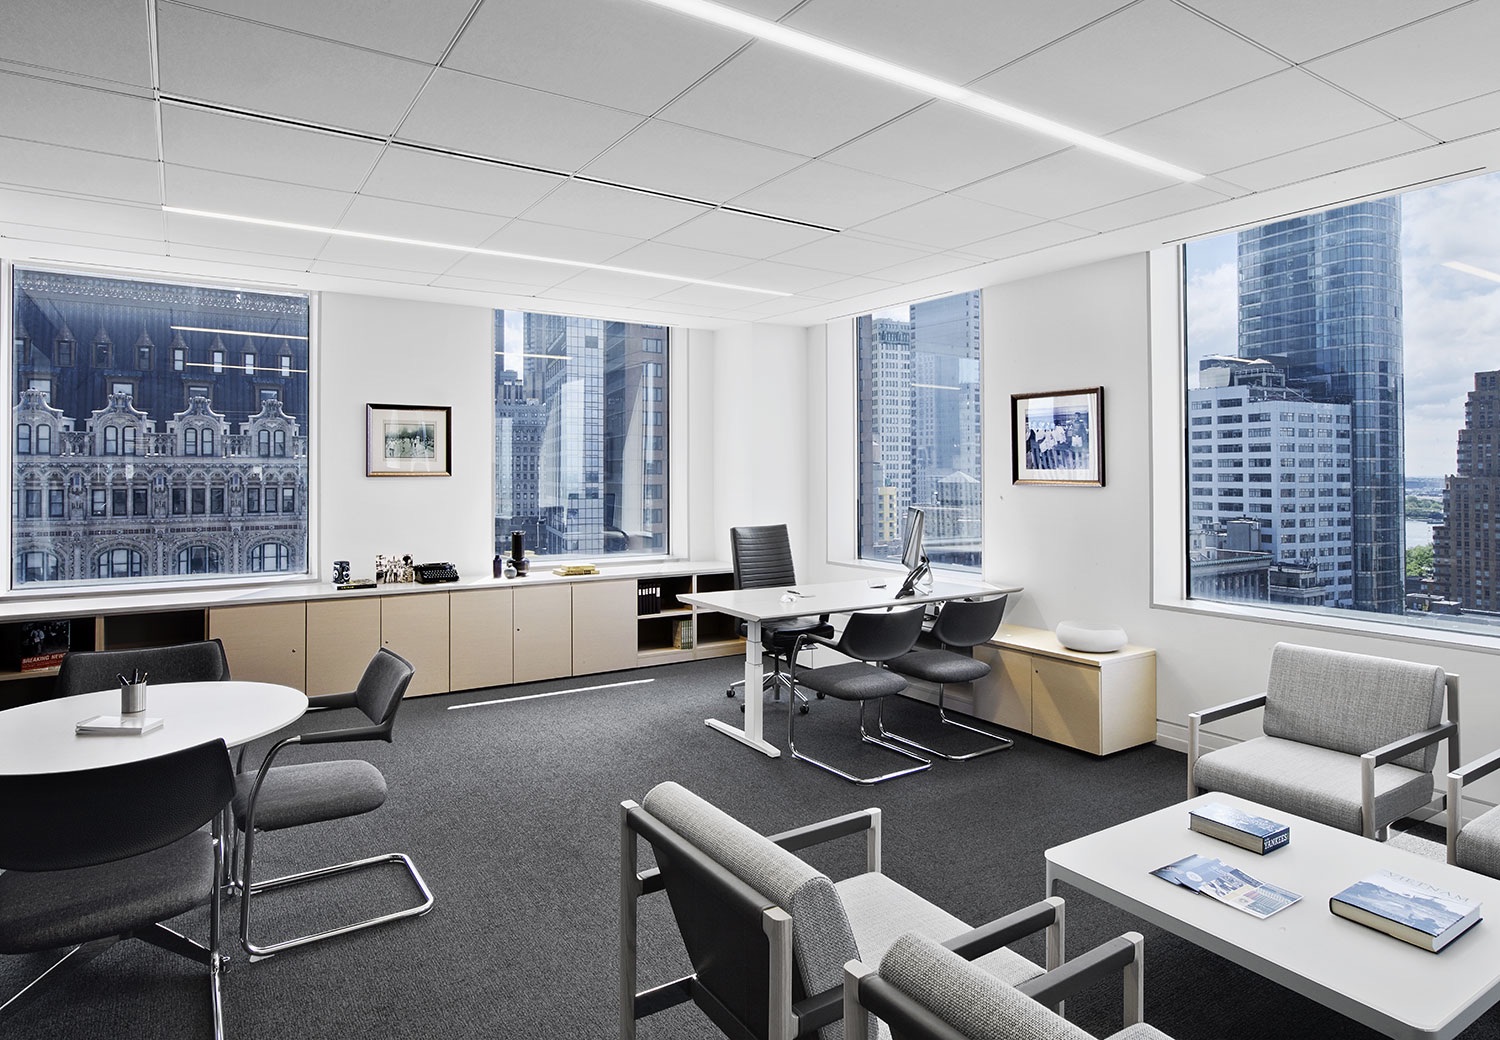 A Tour of Associated Press’ Elegant NYC Headquarters - Officelovin'